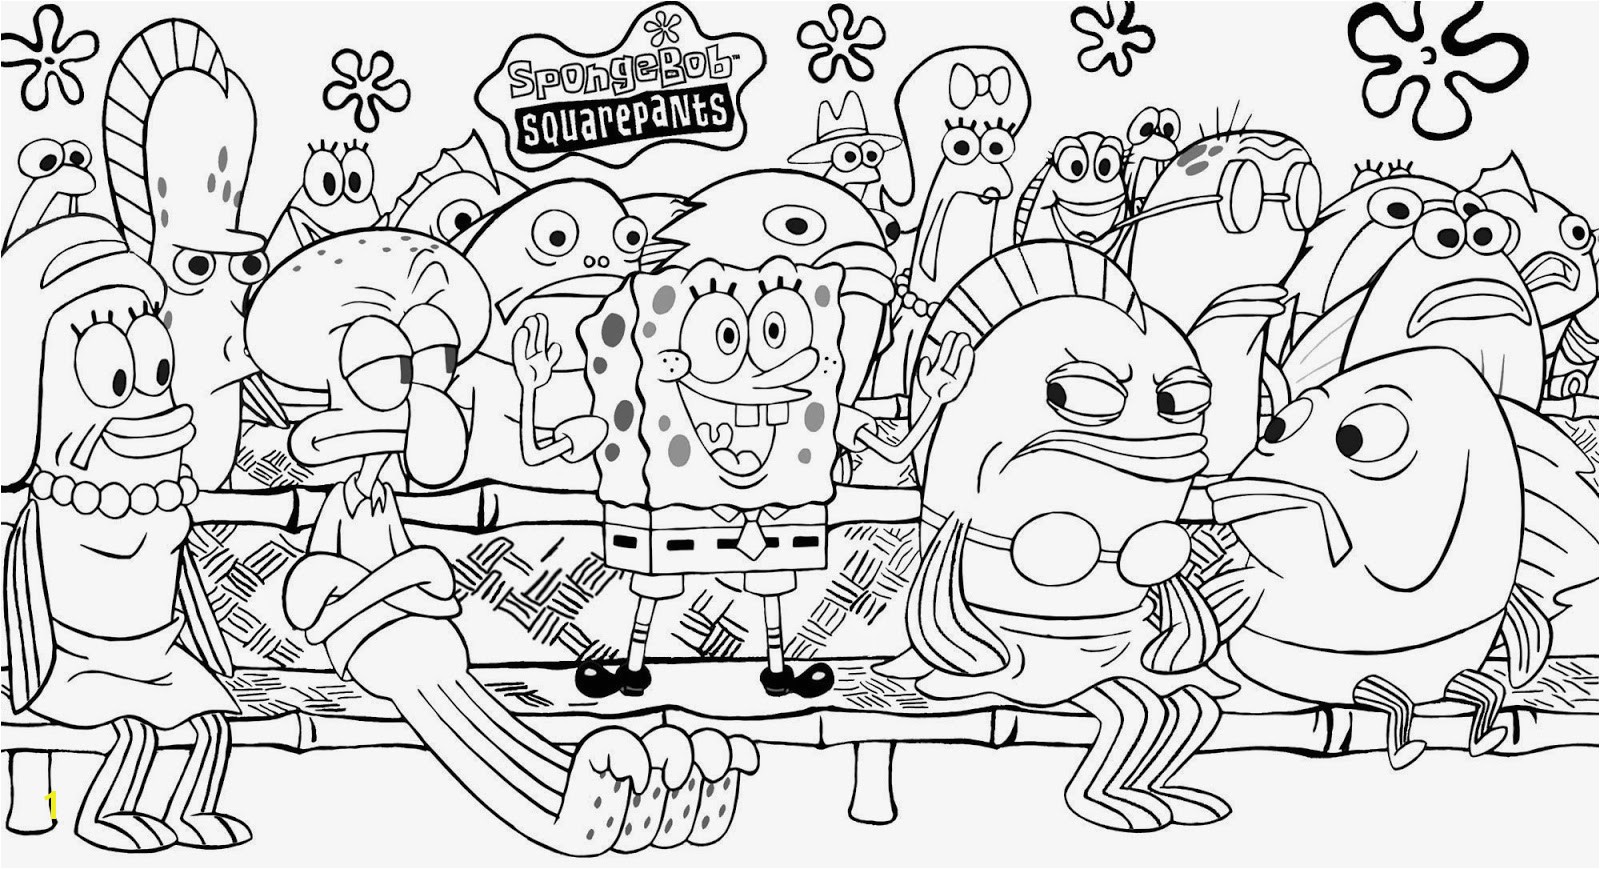 Free Printable Coloring Pages Spongebob Spongebob Coloring Page Best Free Coloring Pages Spongebob